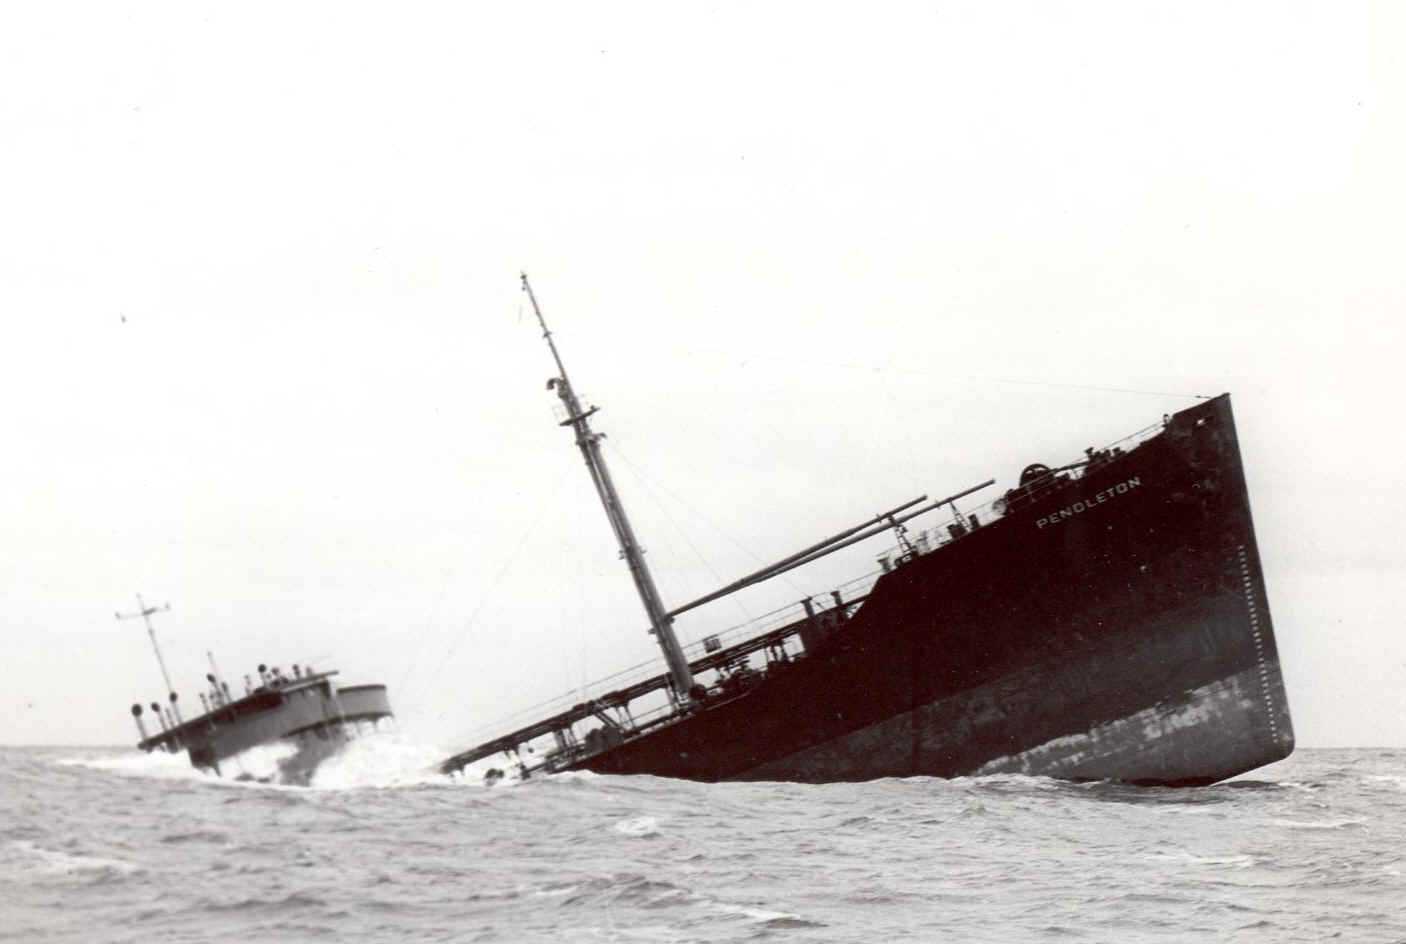 sinking_ship.jpg